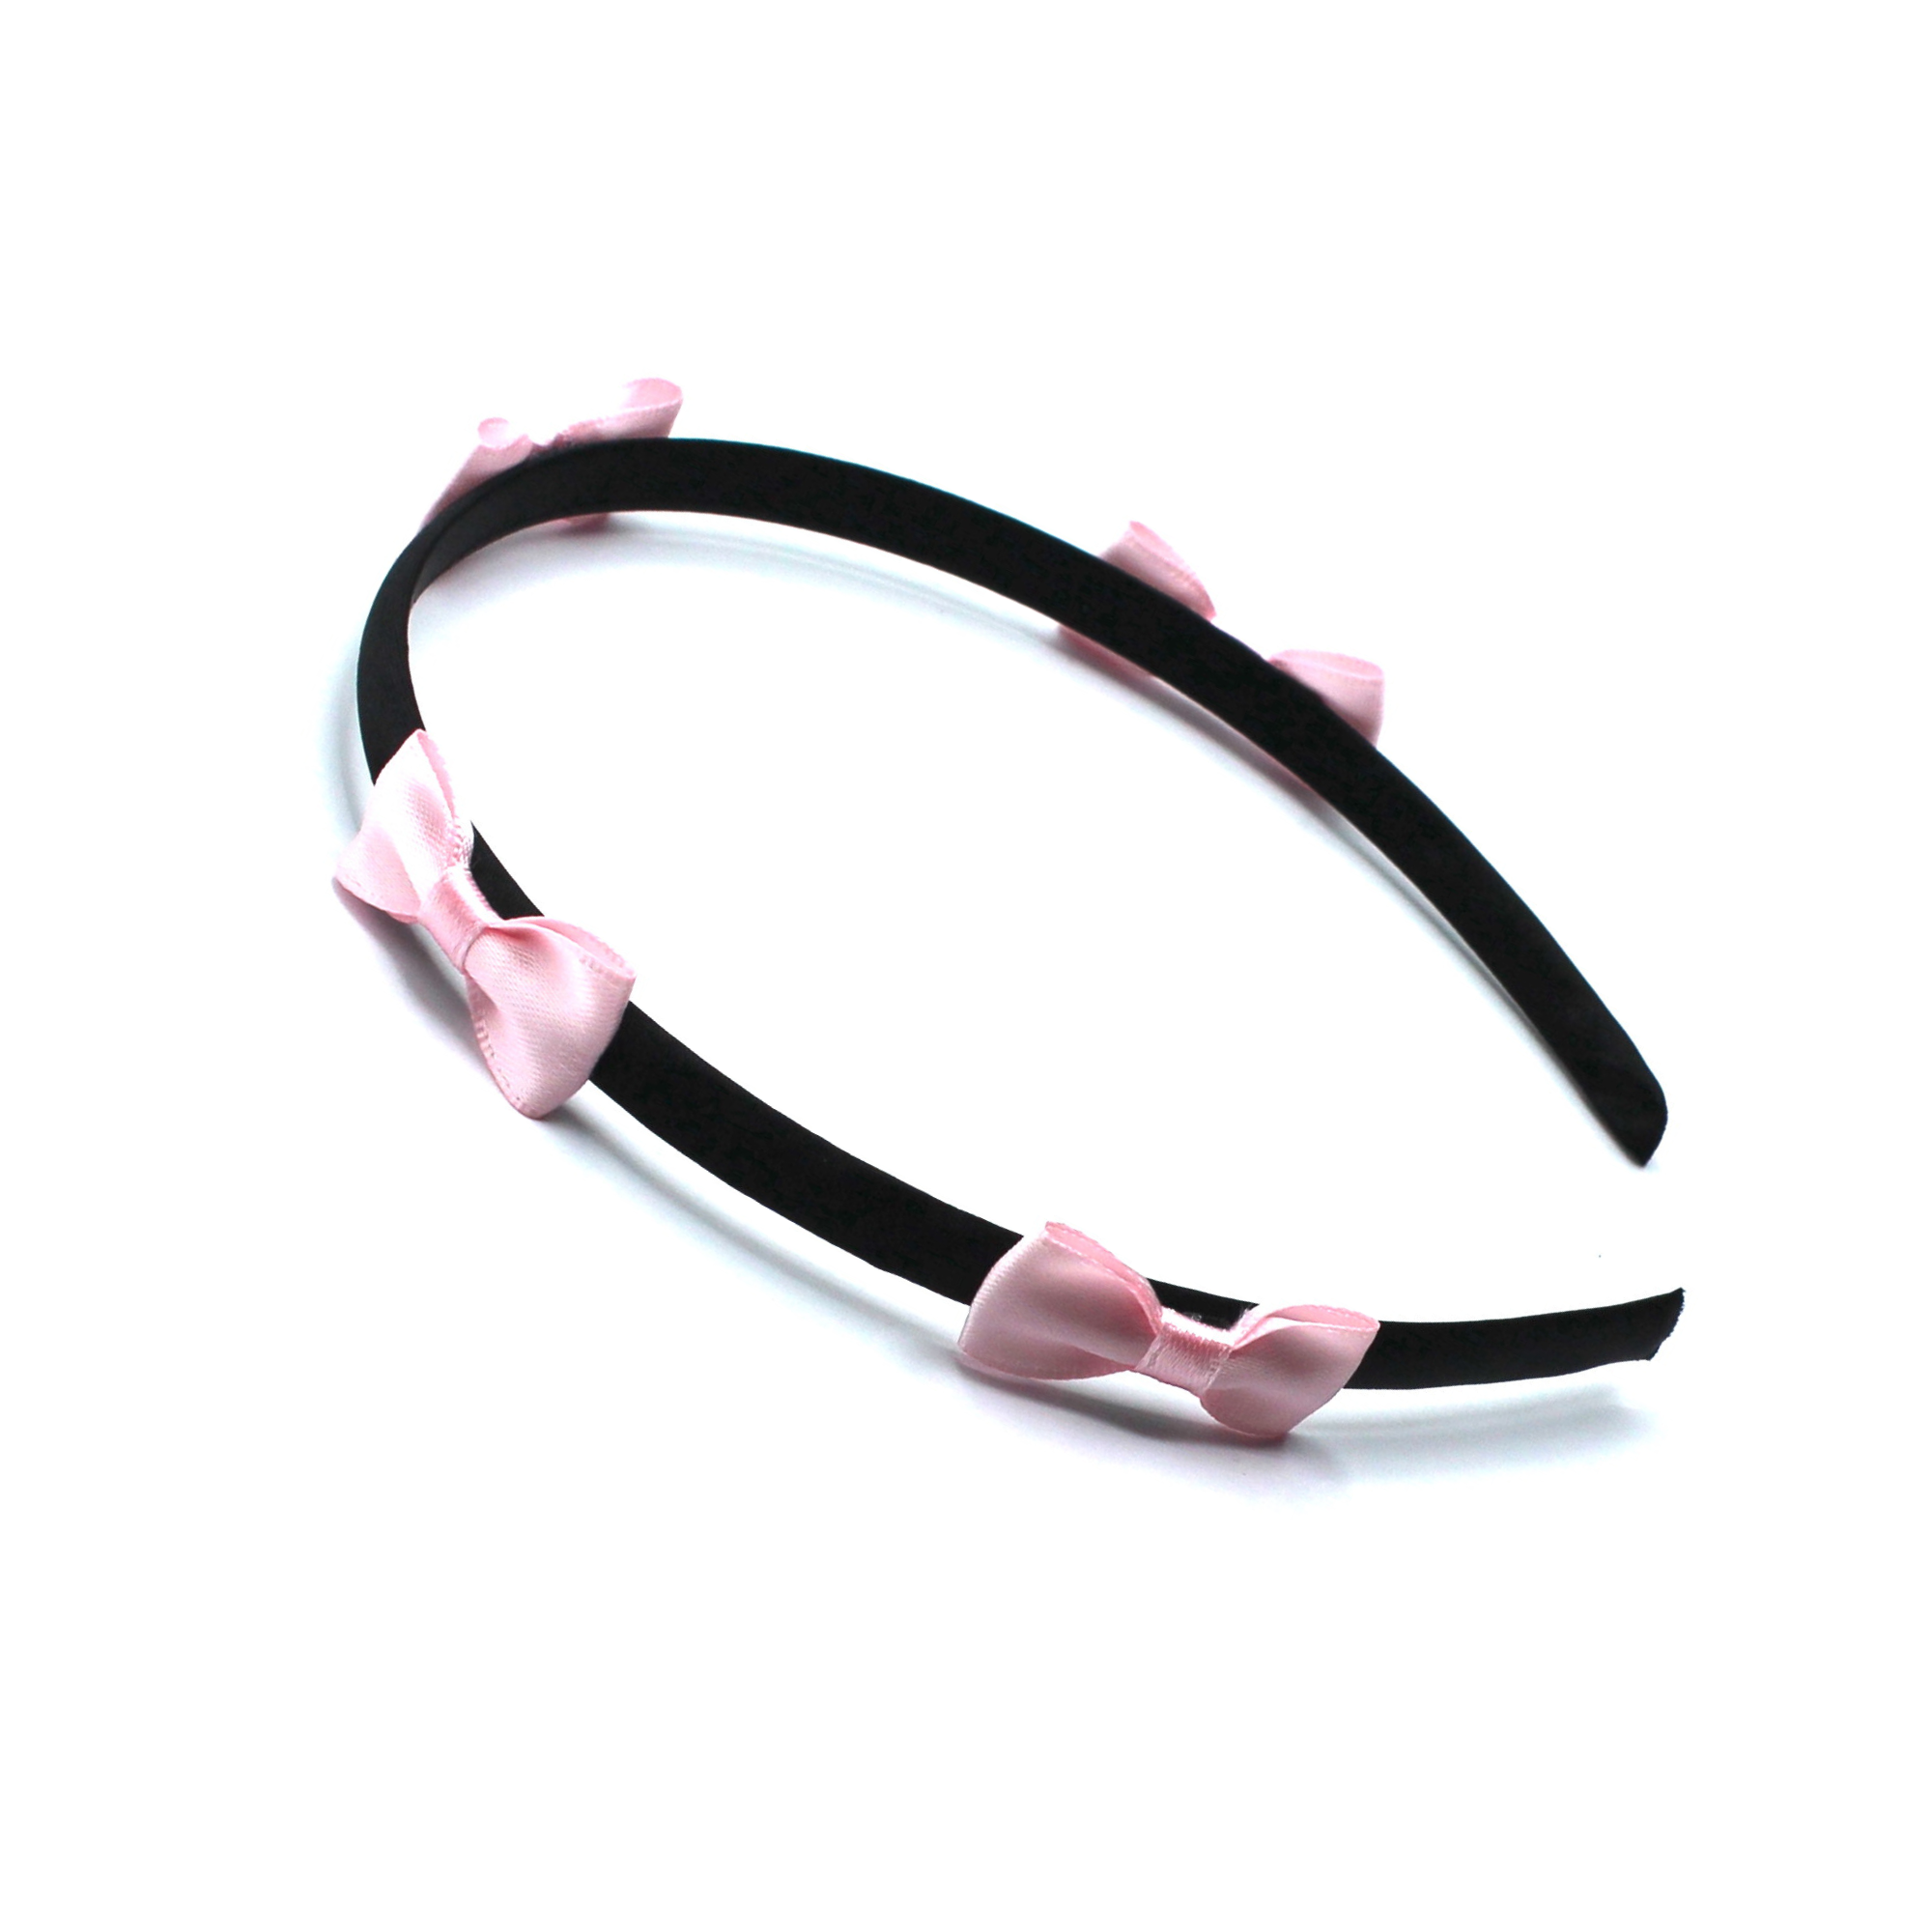 Secrets Pink Bow Black Headband 